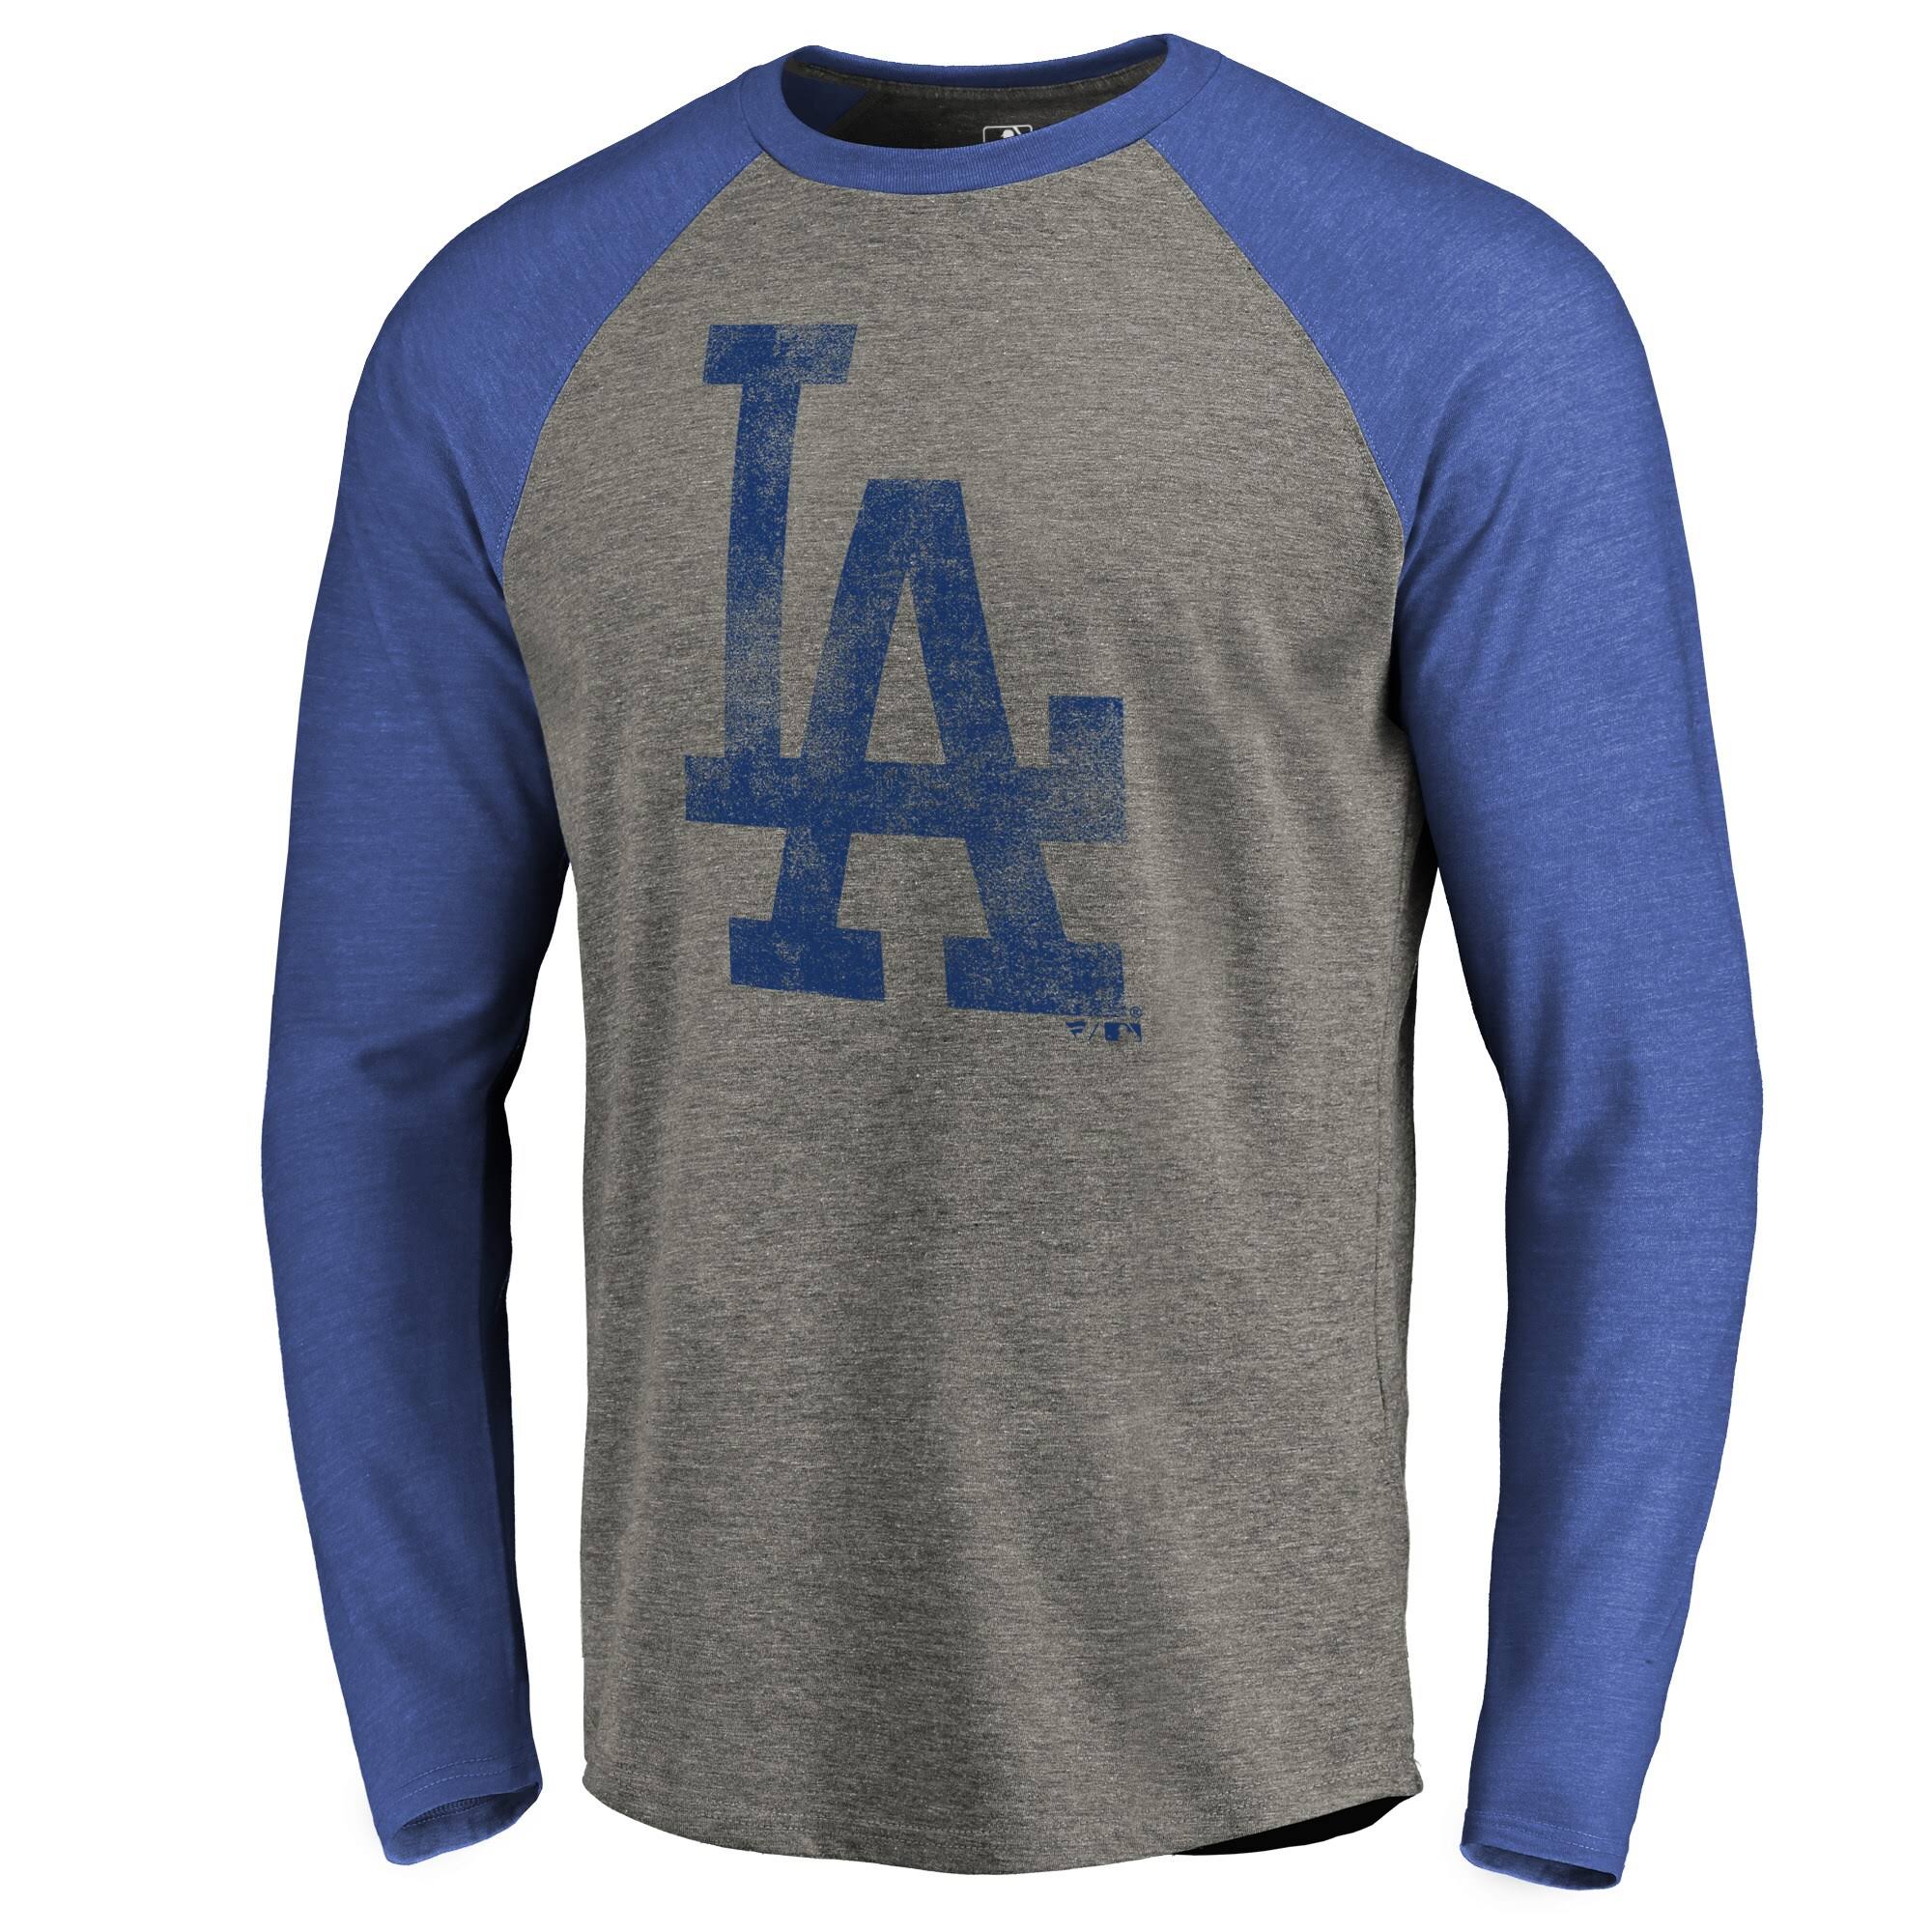 Los Angeles Dodgers Fanatics Branded Distressed Team Big & Tall Long Sleeve Tri-Blend Raglan T-Shirt - Gray/Royal